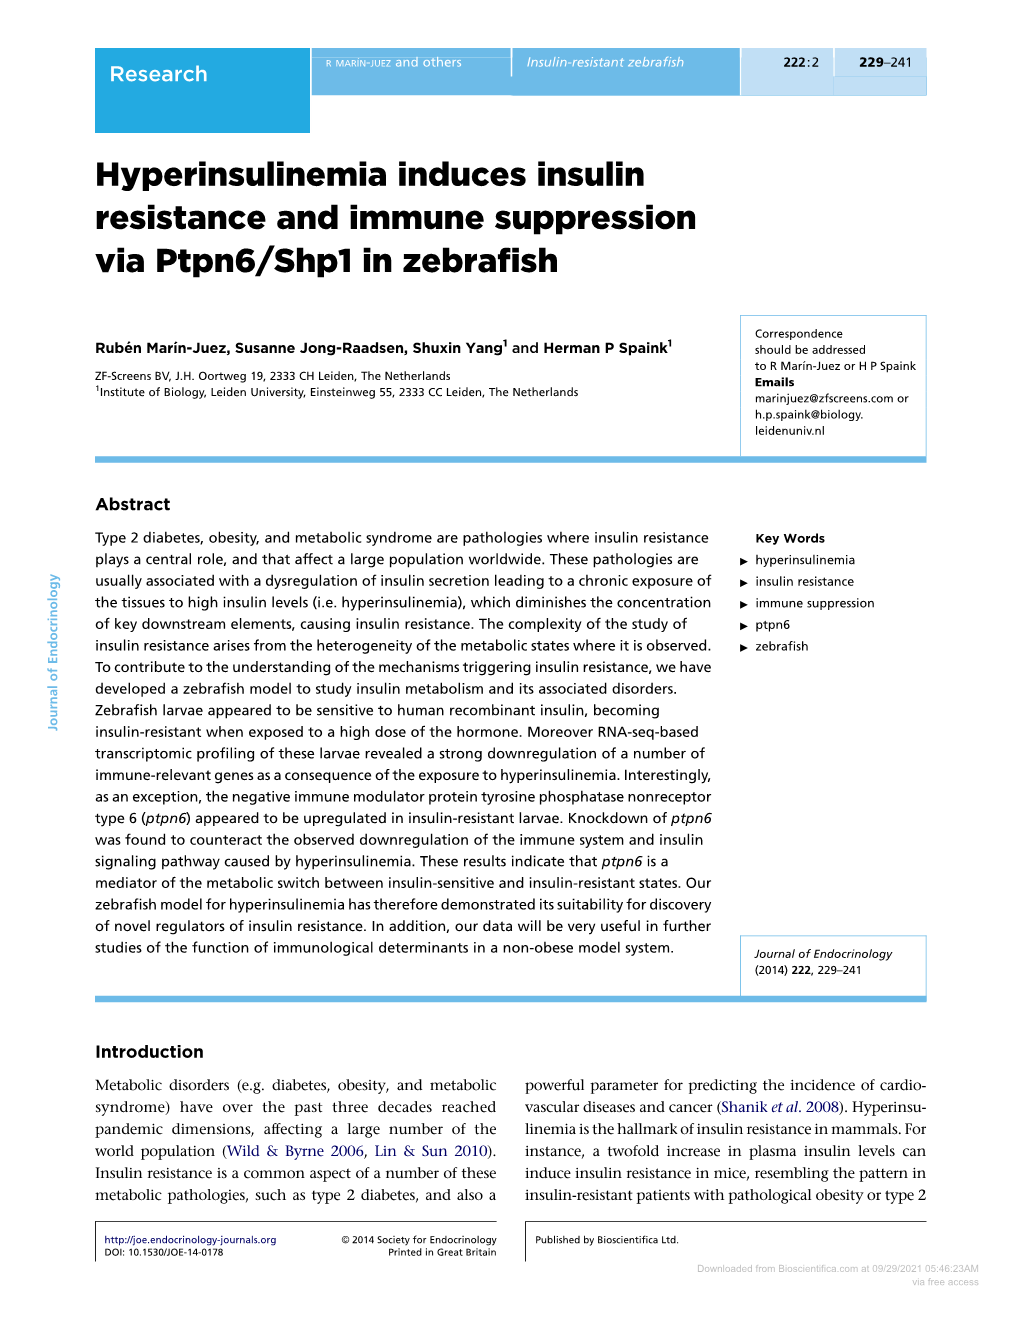 Hyperinsulinemia Induces Insulin Resistance and Immune Suppression Via Ptpn6/Shp1 in Zebraﬁsh